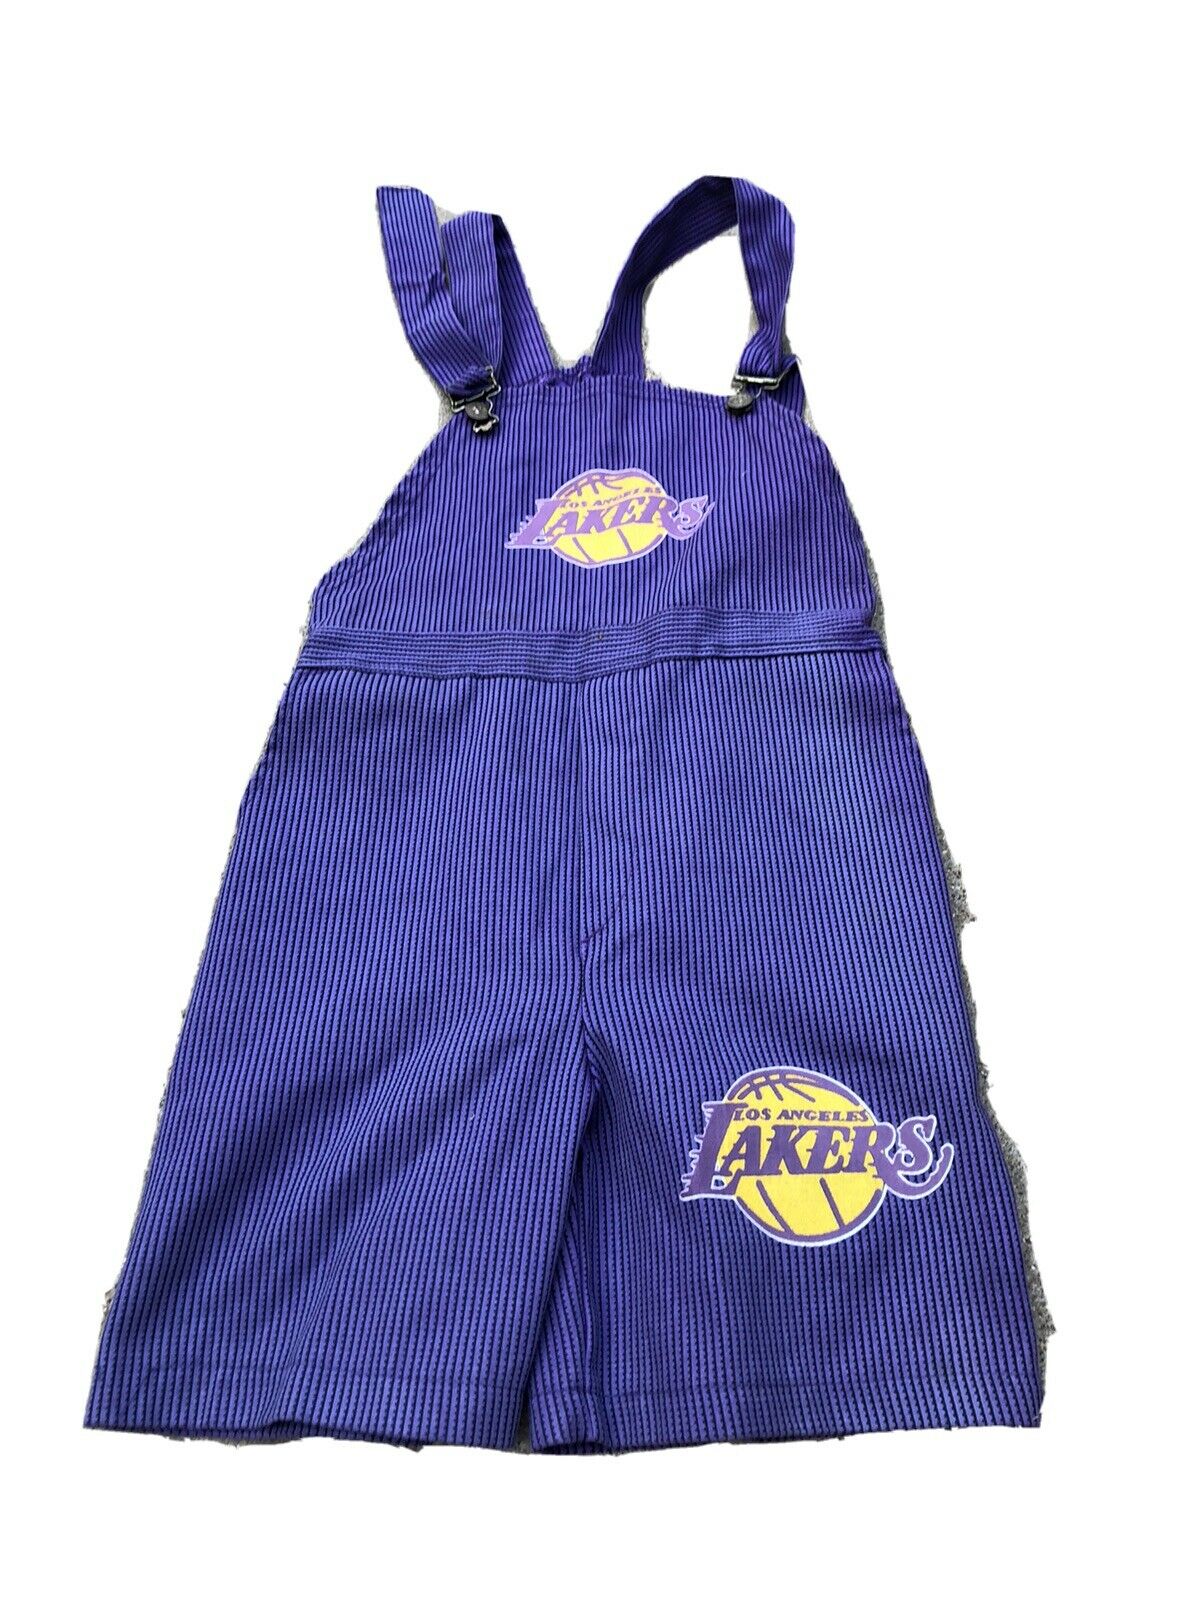 Vintage 80’s 90’s La Lakers Purple Stripe Overalls Shortalls Youth Xl